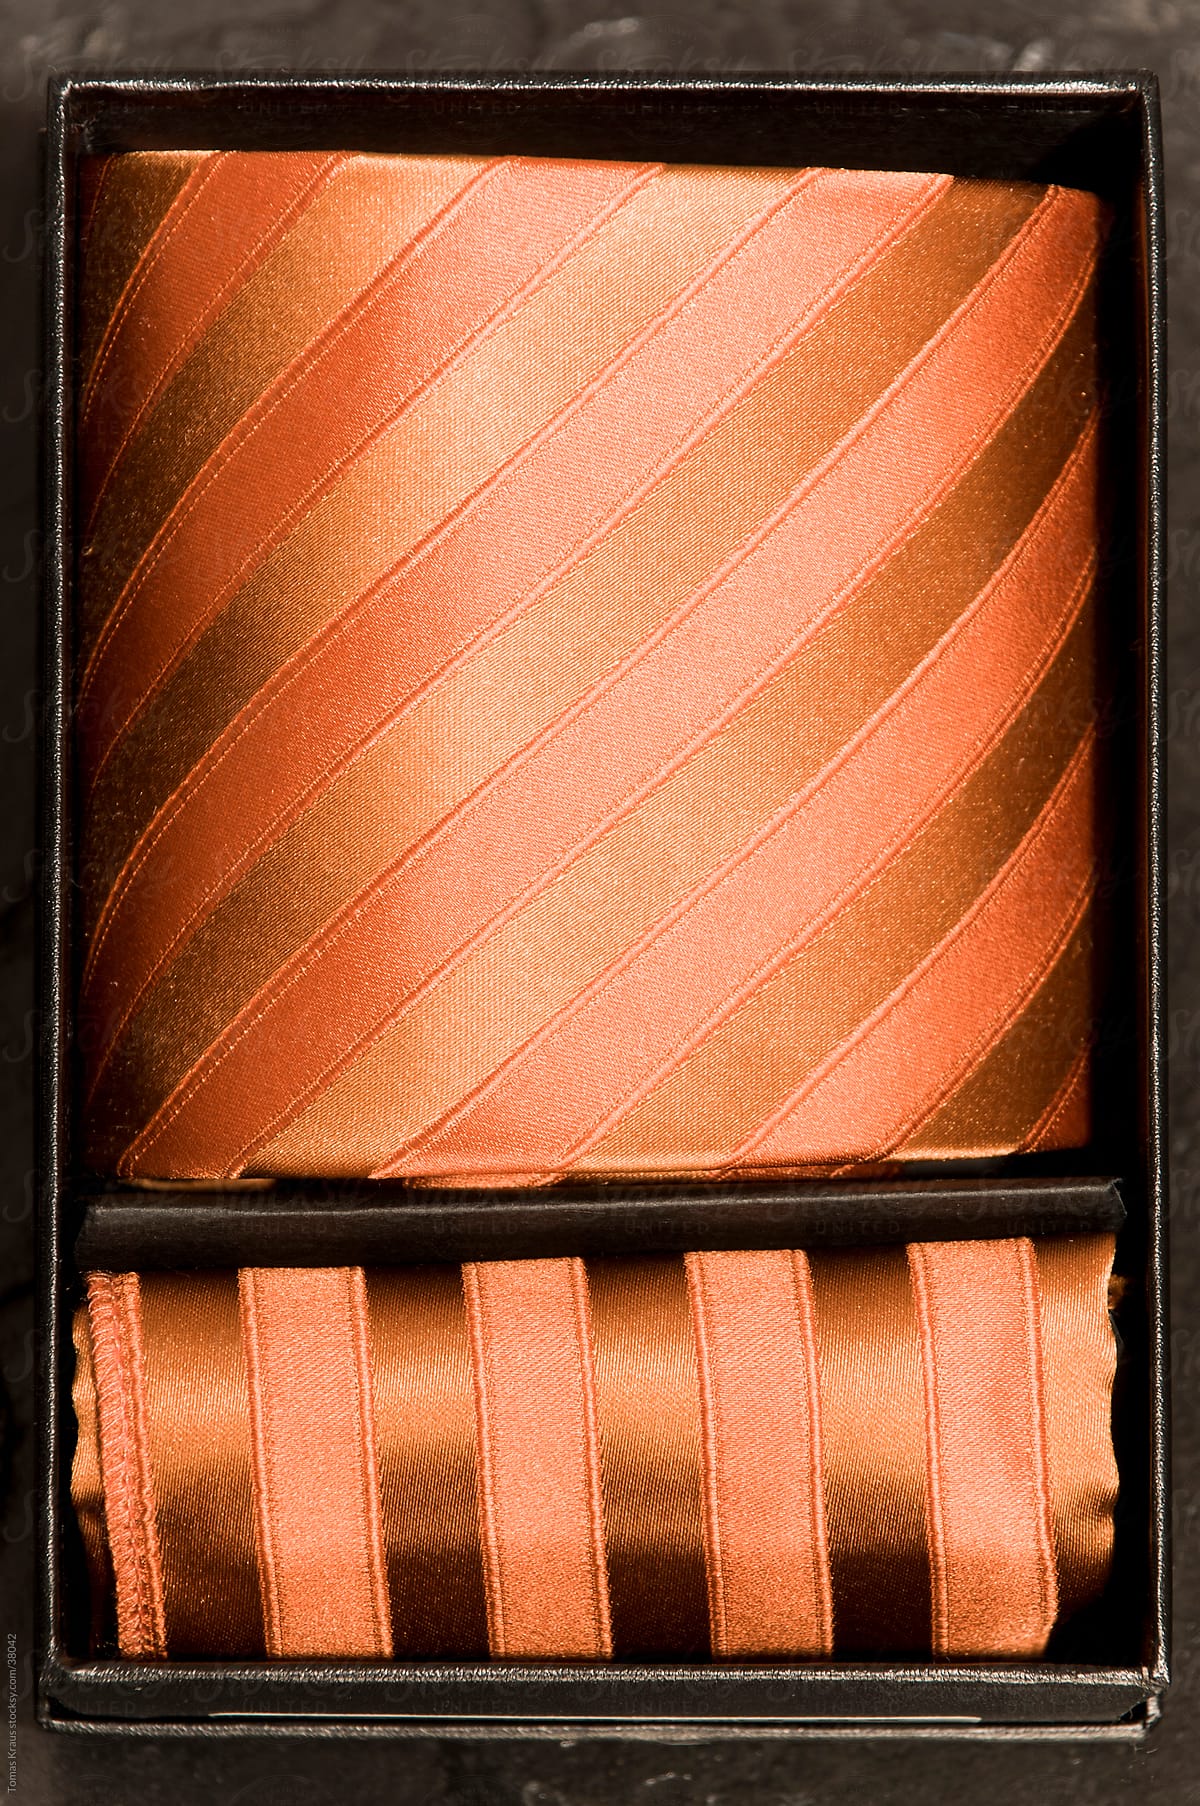 orange tie